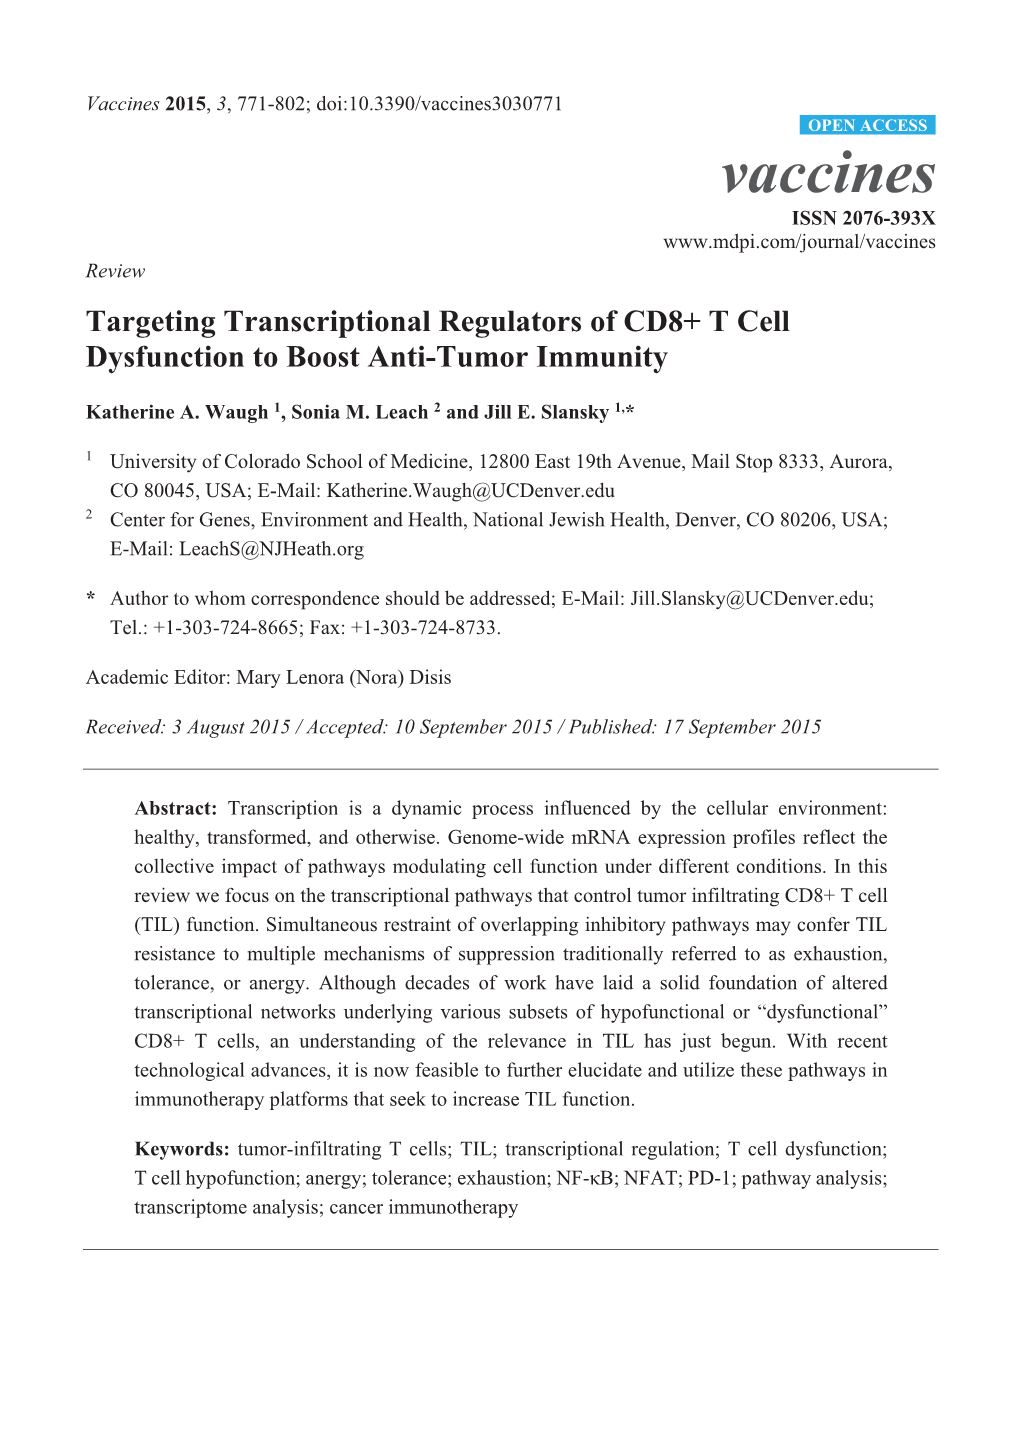 Targeting Transcriptional Regulators of CD8+ T Cell Dysfunction to Boost Anti-Tumor Immunity